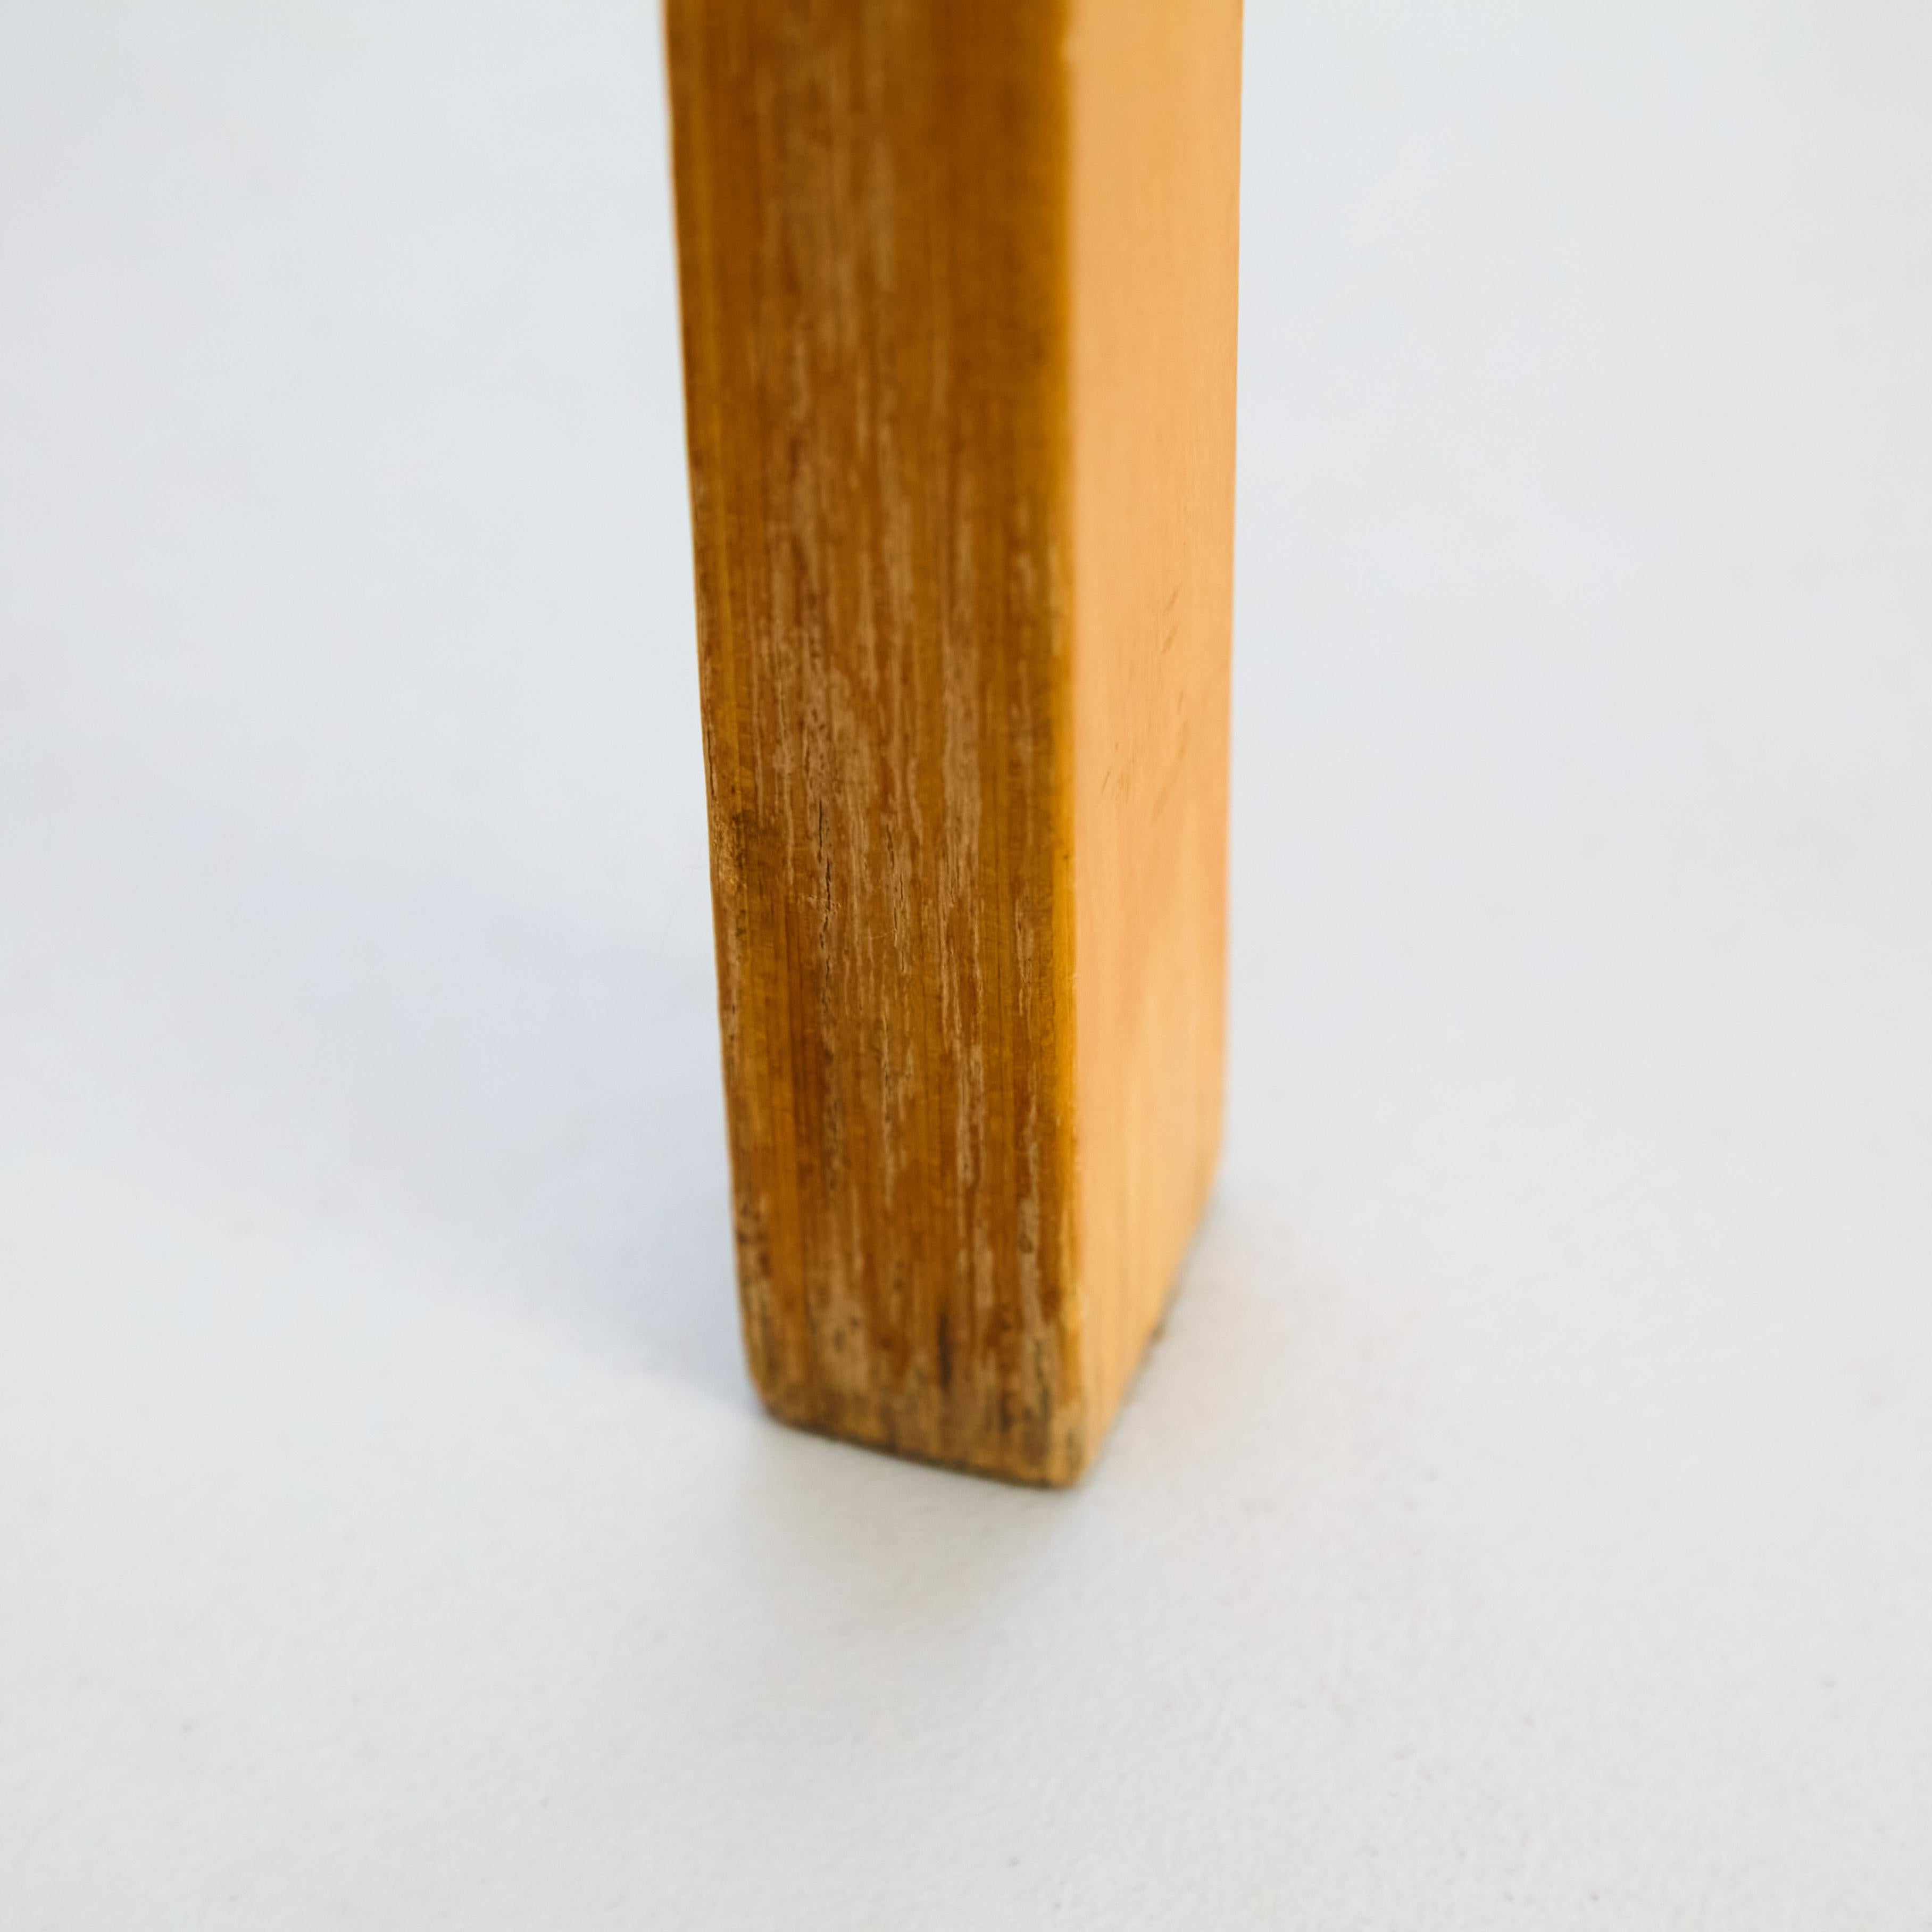 Alvar Aalto Style Mid-Century Modern Wood Stool, circa 1960 For Sale 2